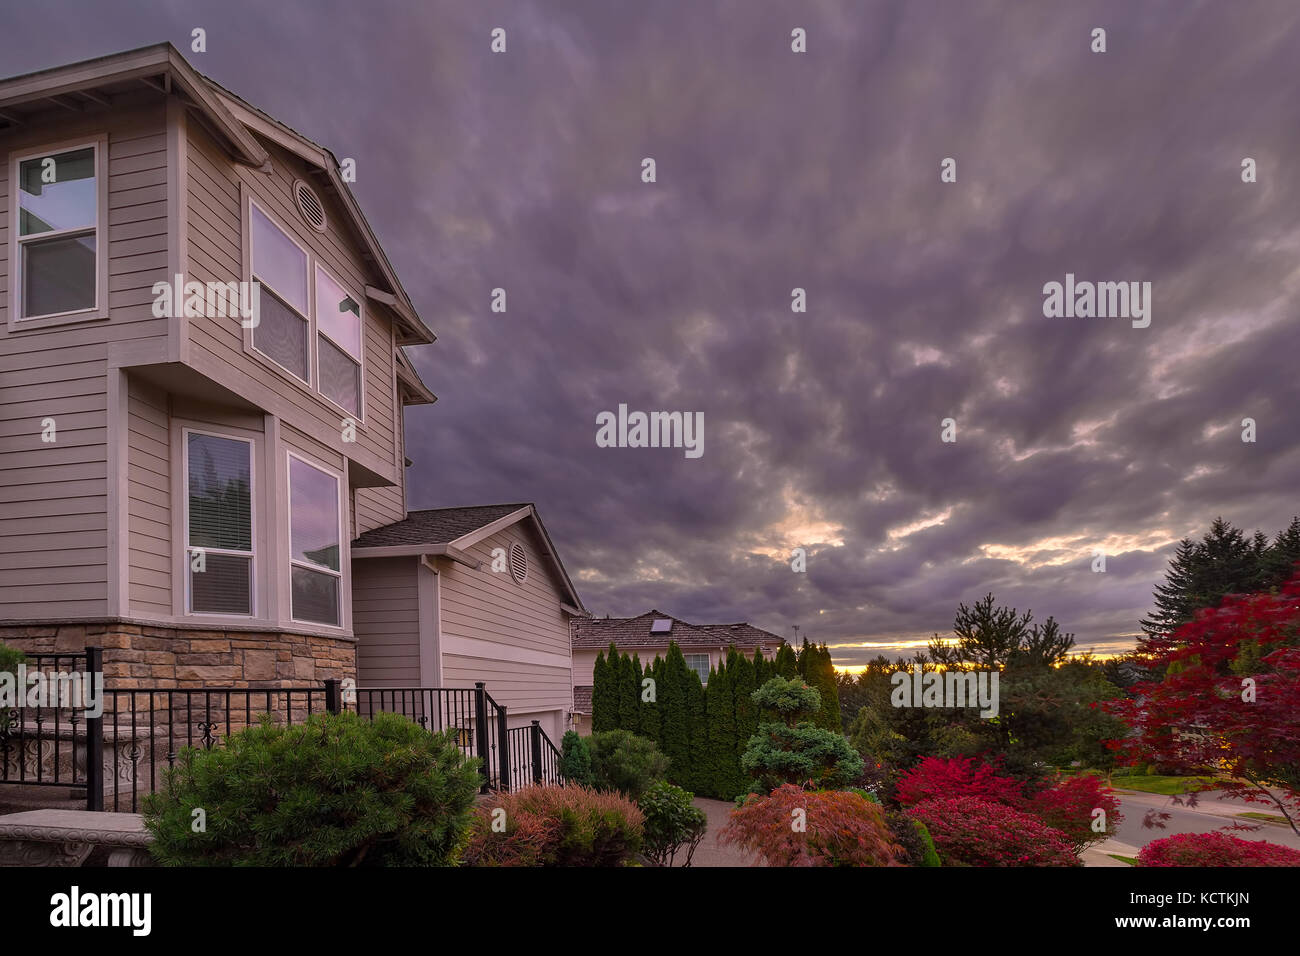 Stormy cky over North American suburbs neighborhood in fall season Stock Photo